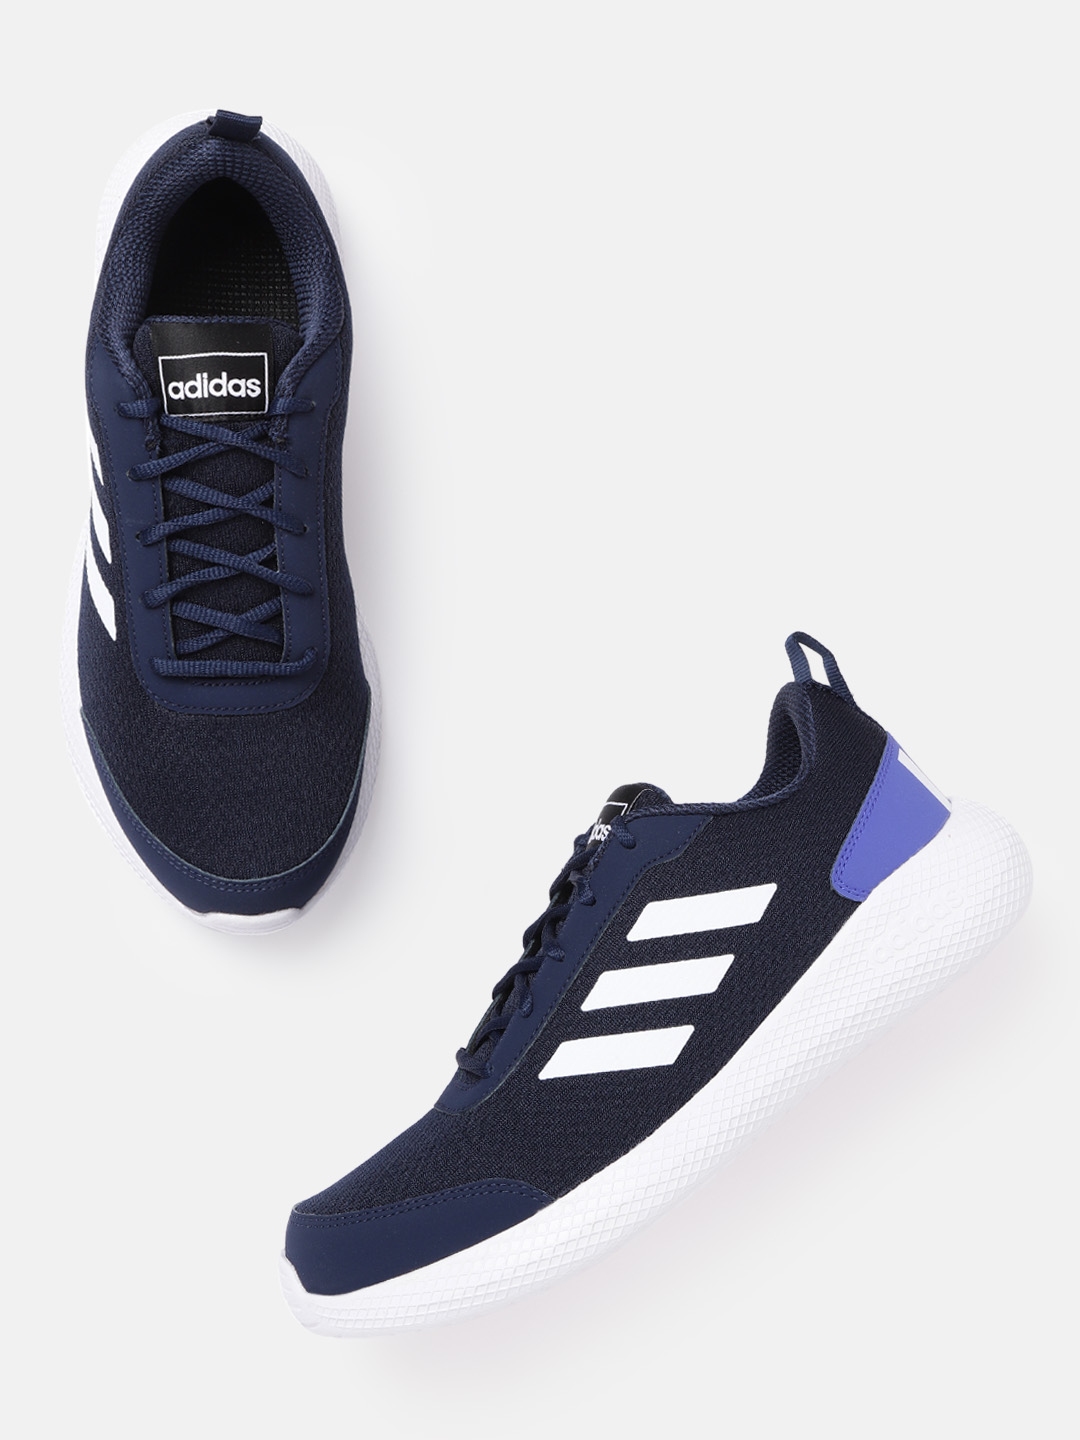 Buy ADIDAS Men Navy Blue Woven Design Adistound M Running Shoes ...